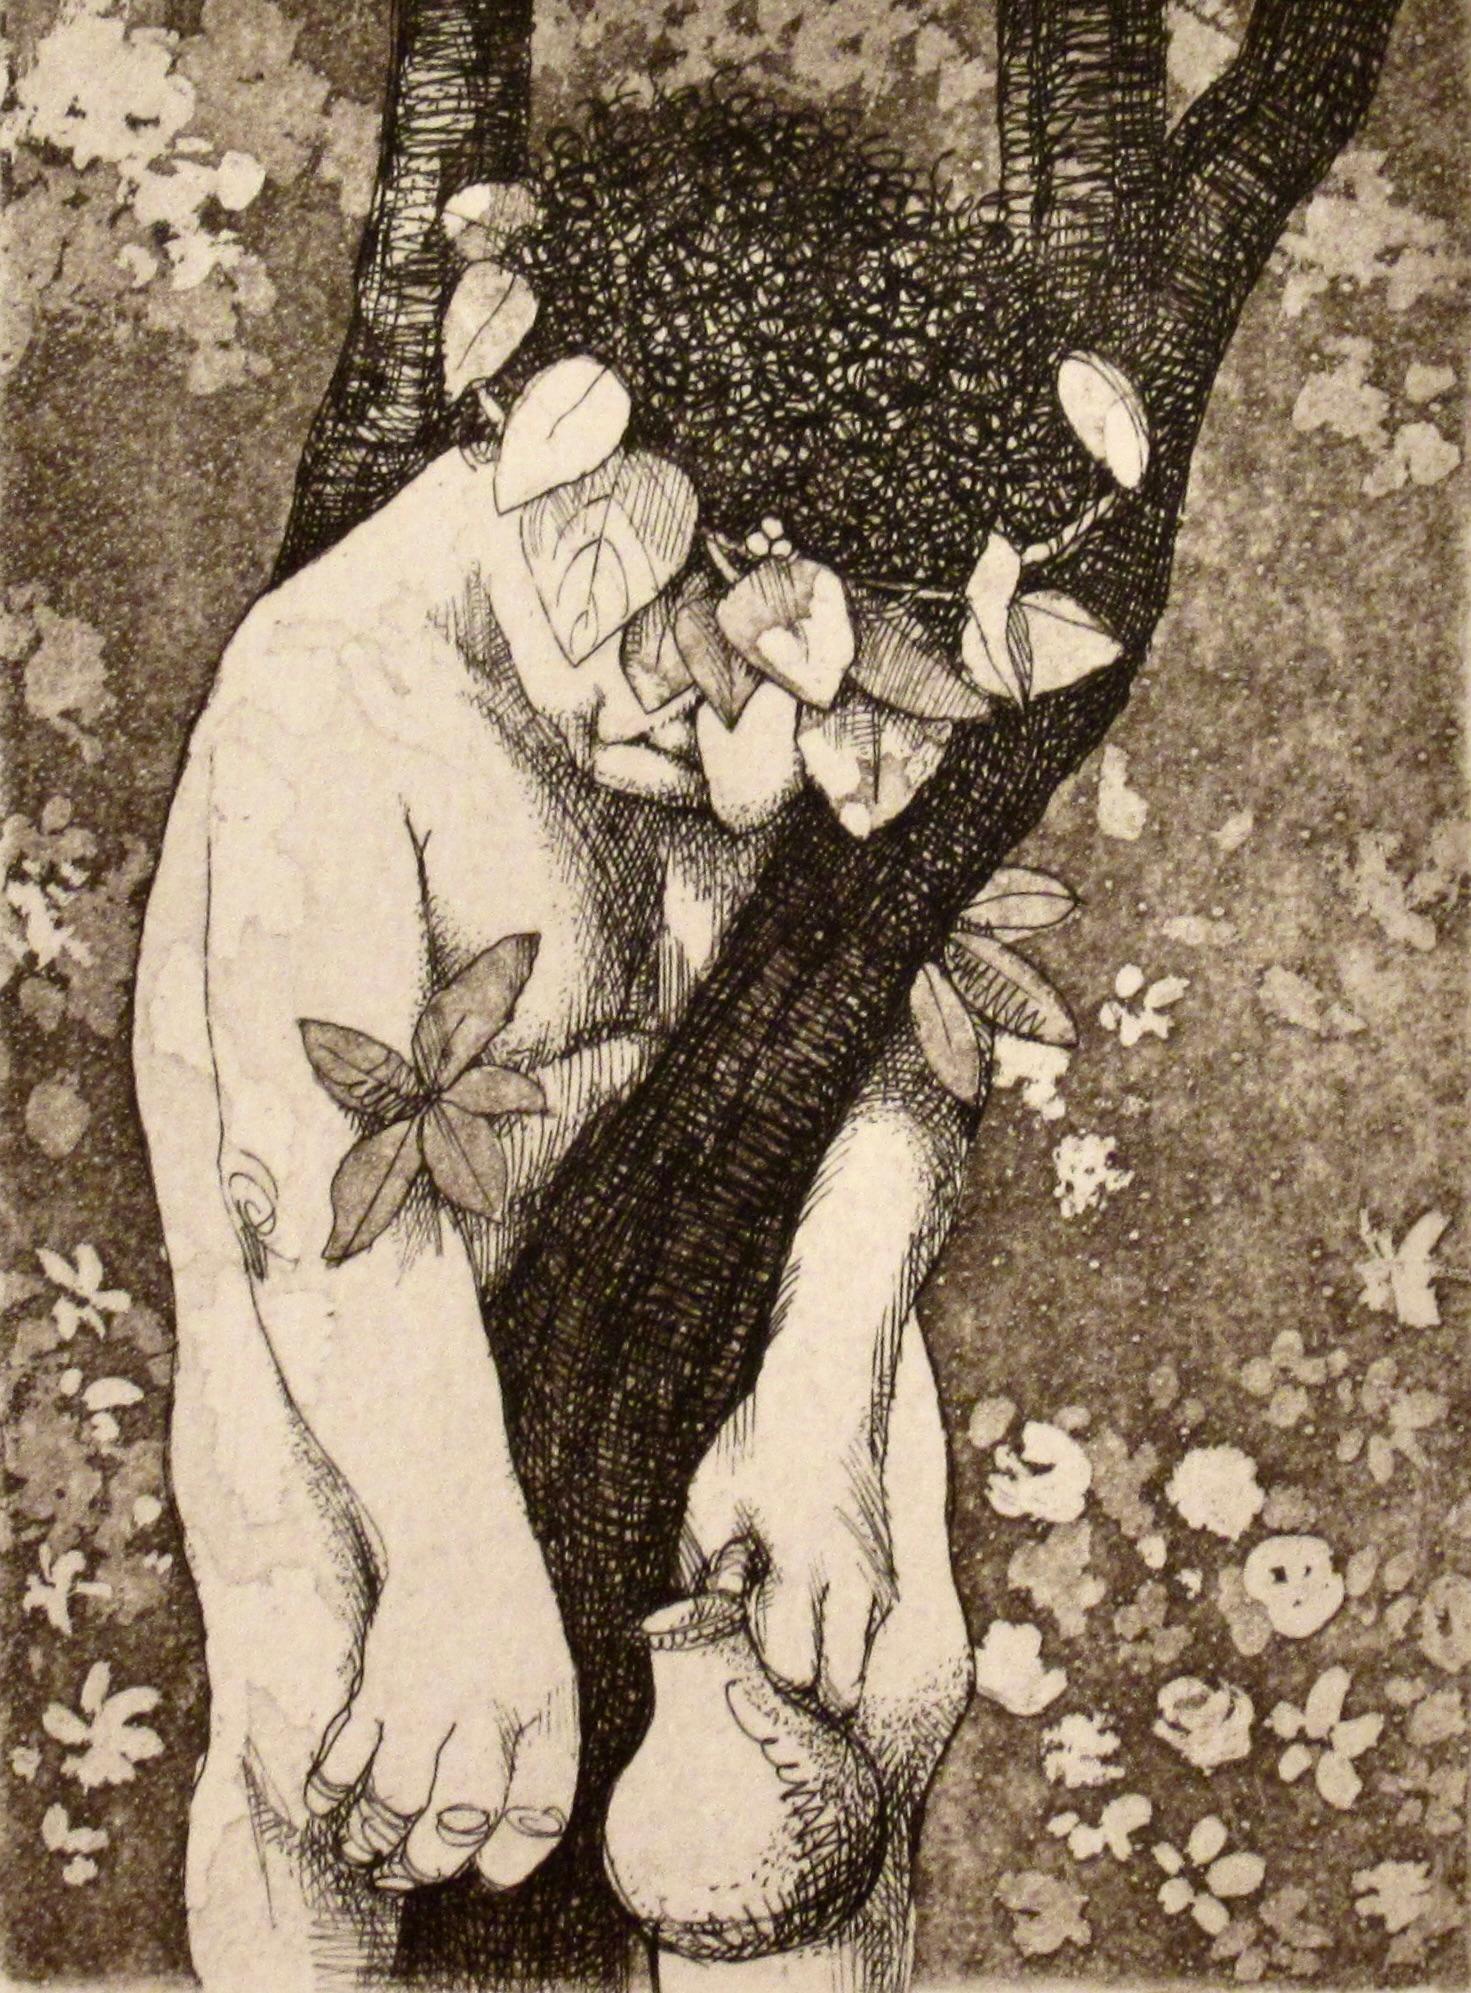 Sleeping Faun - Print by Charles Bragg